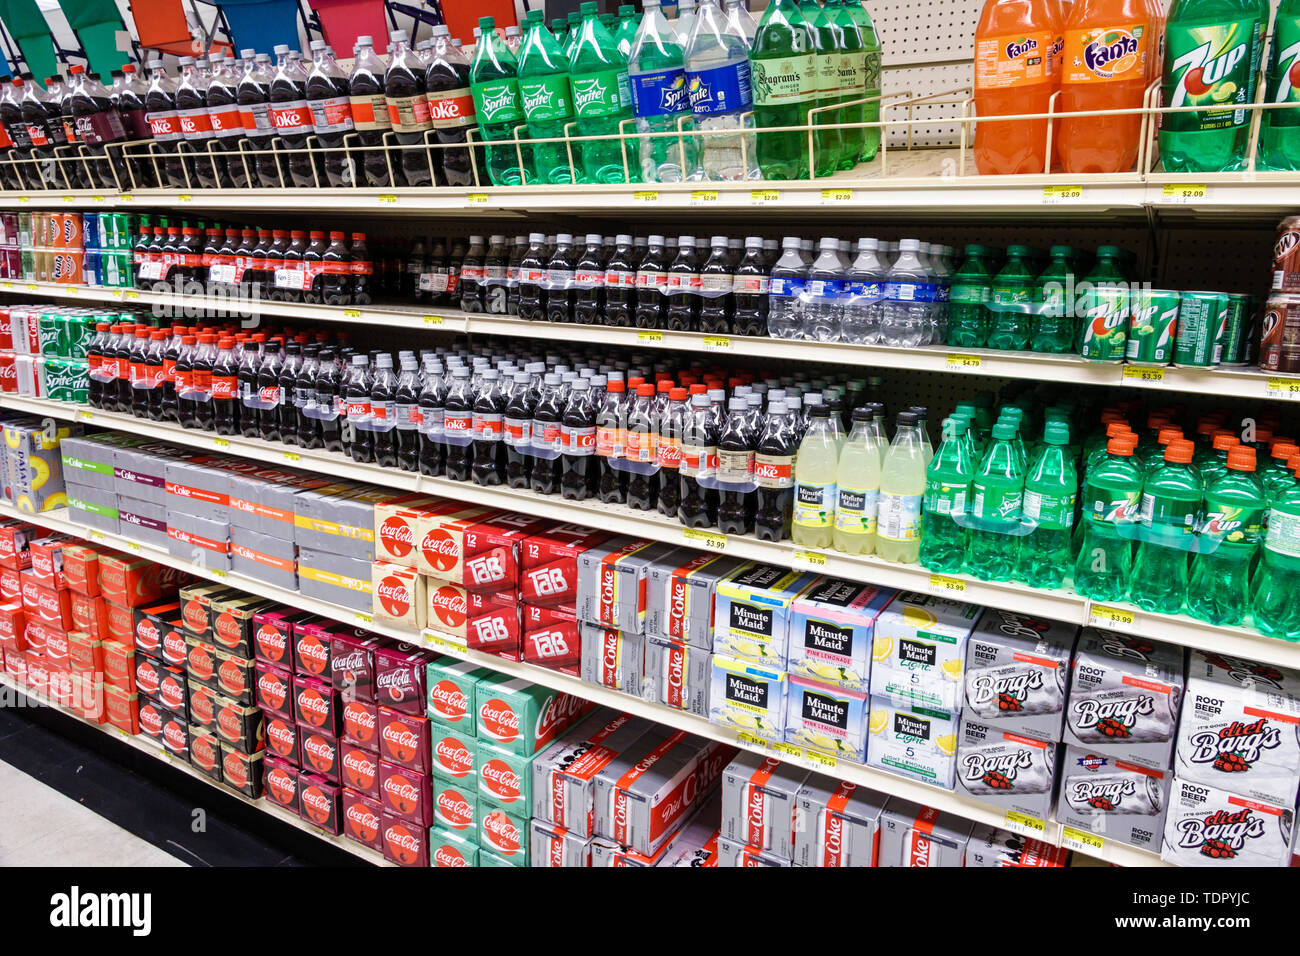 Sanibel Island Florida,Jerry's Foods,grocery store supermarket,inside interior,shelves display sale,soda,soft drinks,Coca-Cola,plastic bottles,7UP,Fan Stock Photo